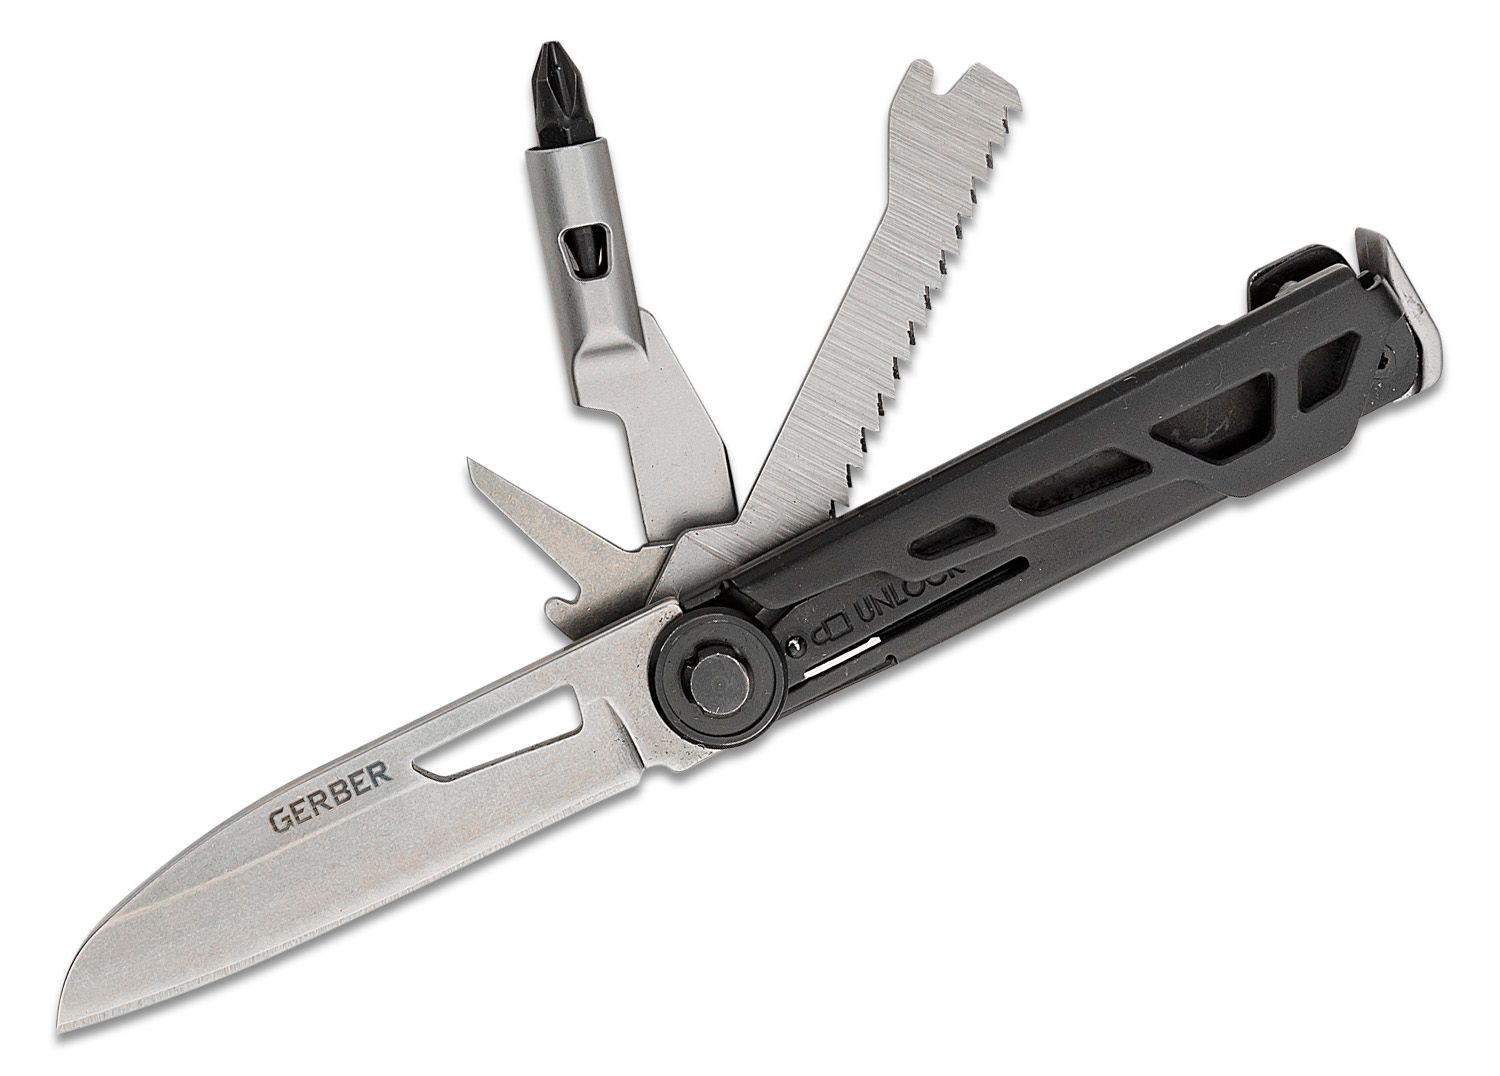 Hammer Brand USA 2 Blade Pocket Knife, 2 1/4 Edge. - Tool Exchange